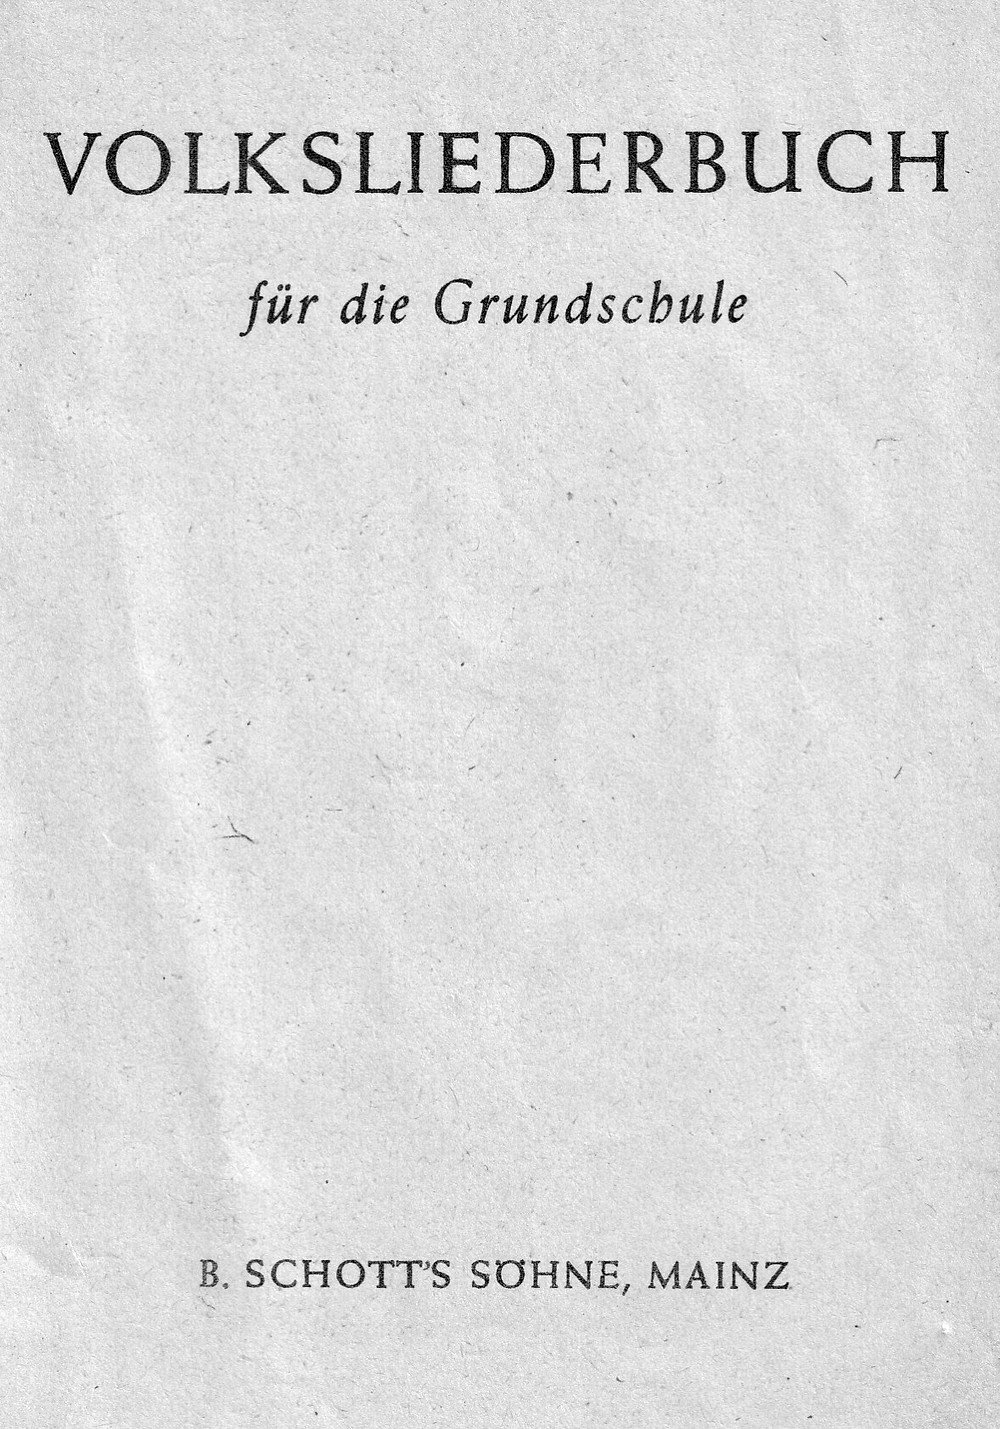 Volksliederbuch (Kulturverein Guntersblum CC BY-NC-SA)